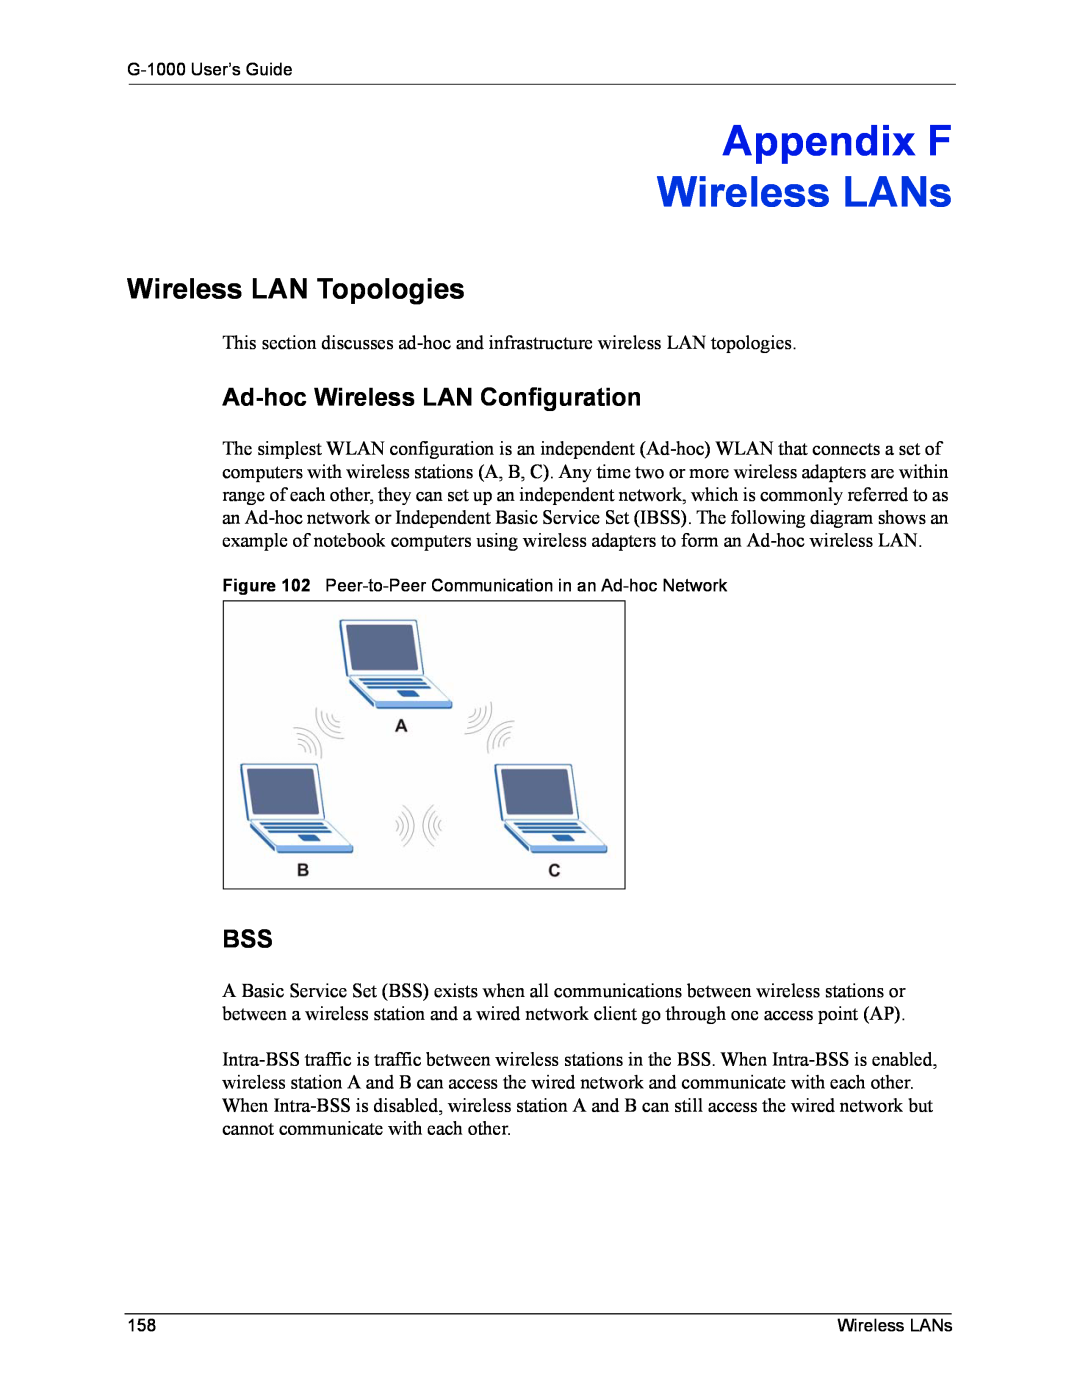 ZyXEL Communications G-1000 manual Appendix F, Wireless LANs, Wireless LAN Topologies, Ad-hoc Wireless LAN Configuration 